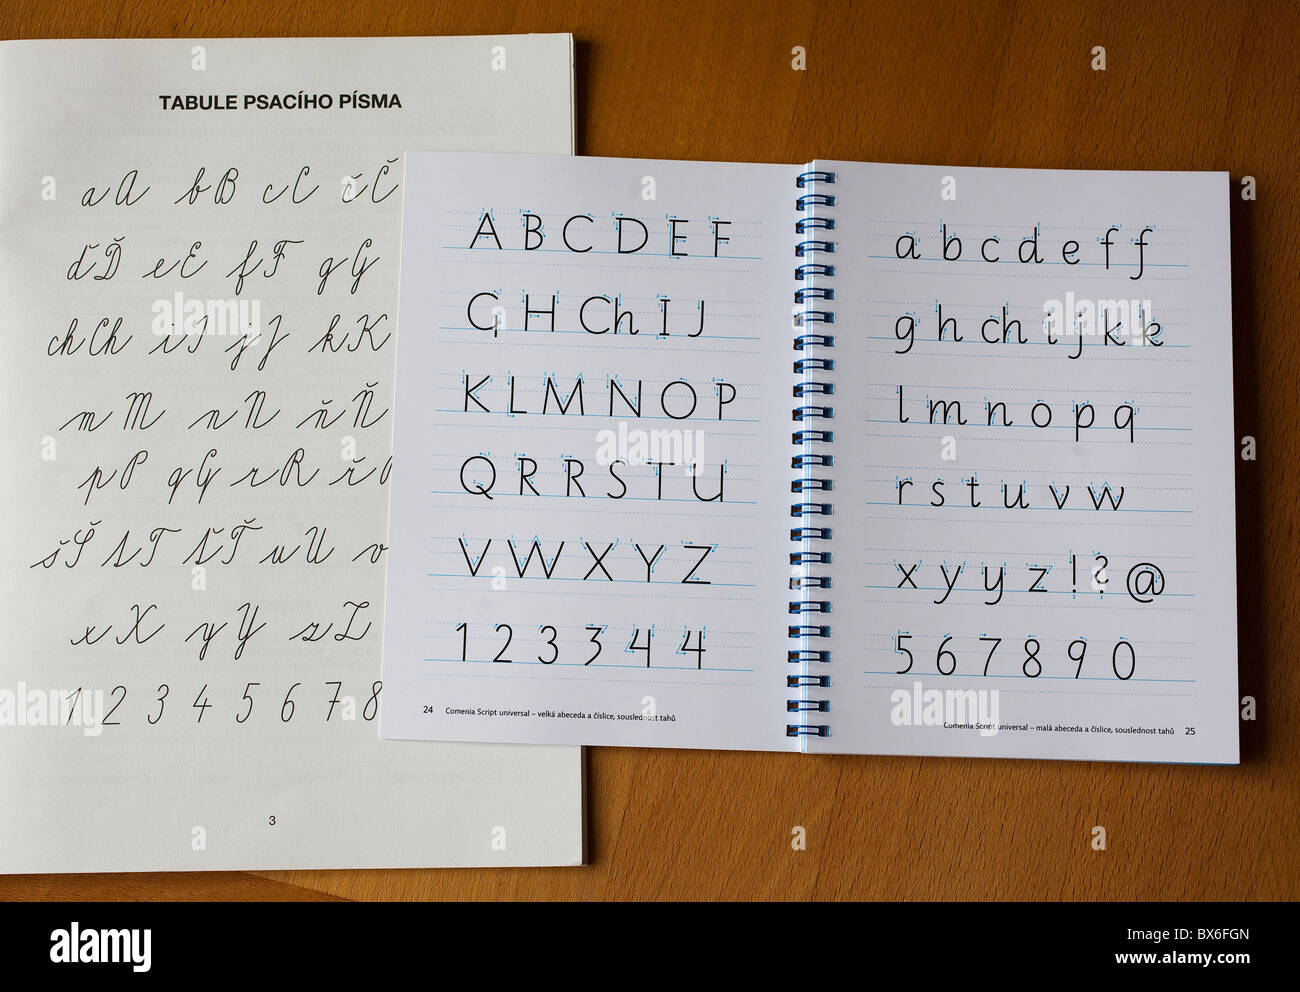 Comenia Script universal, alphabet Stock Photo